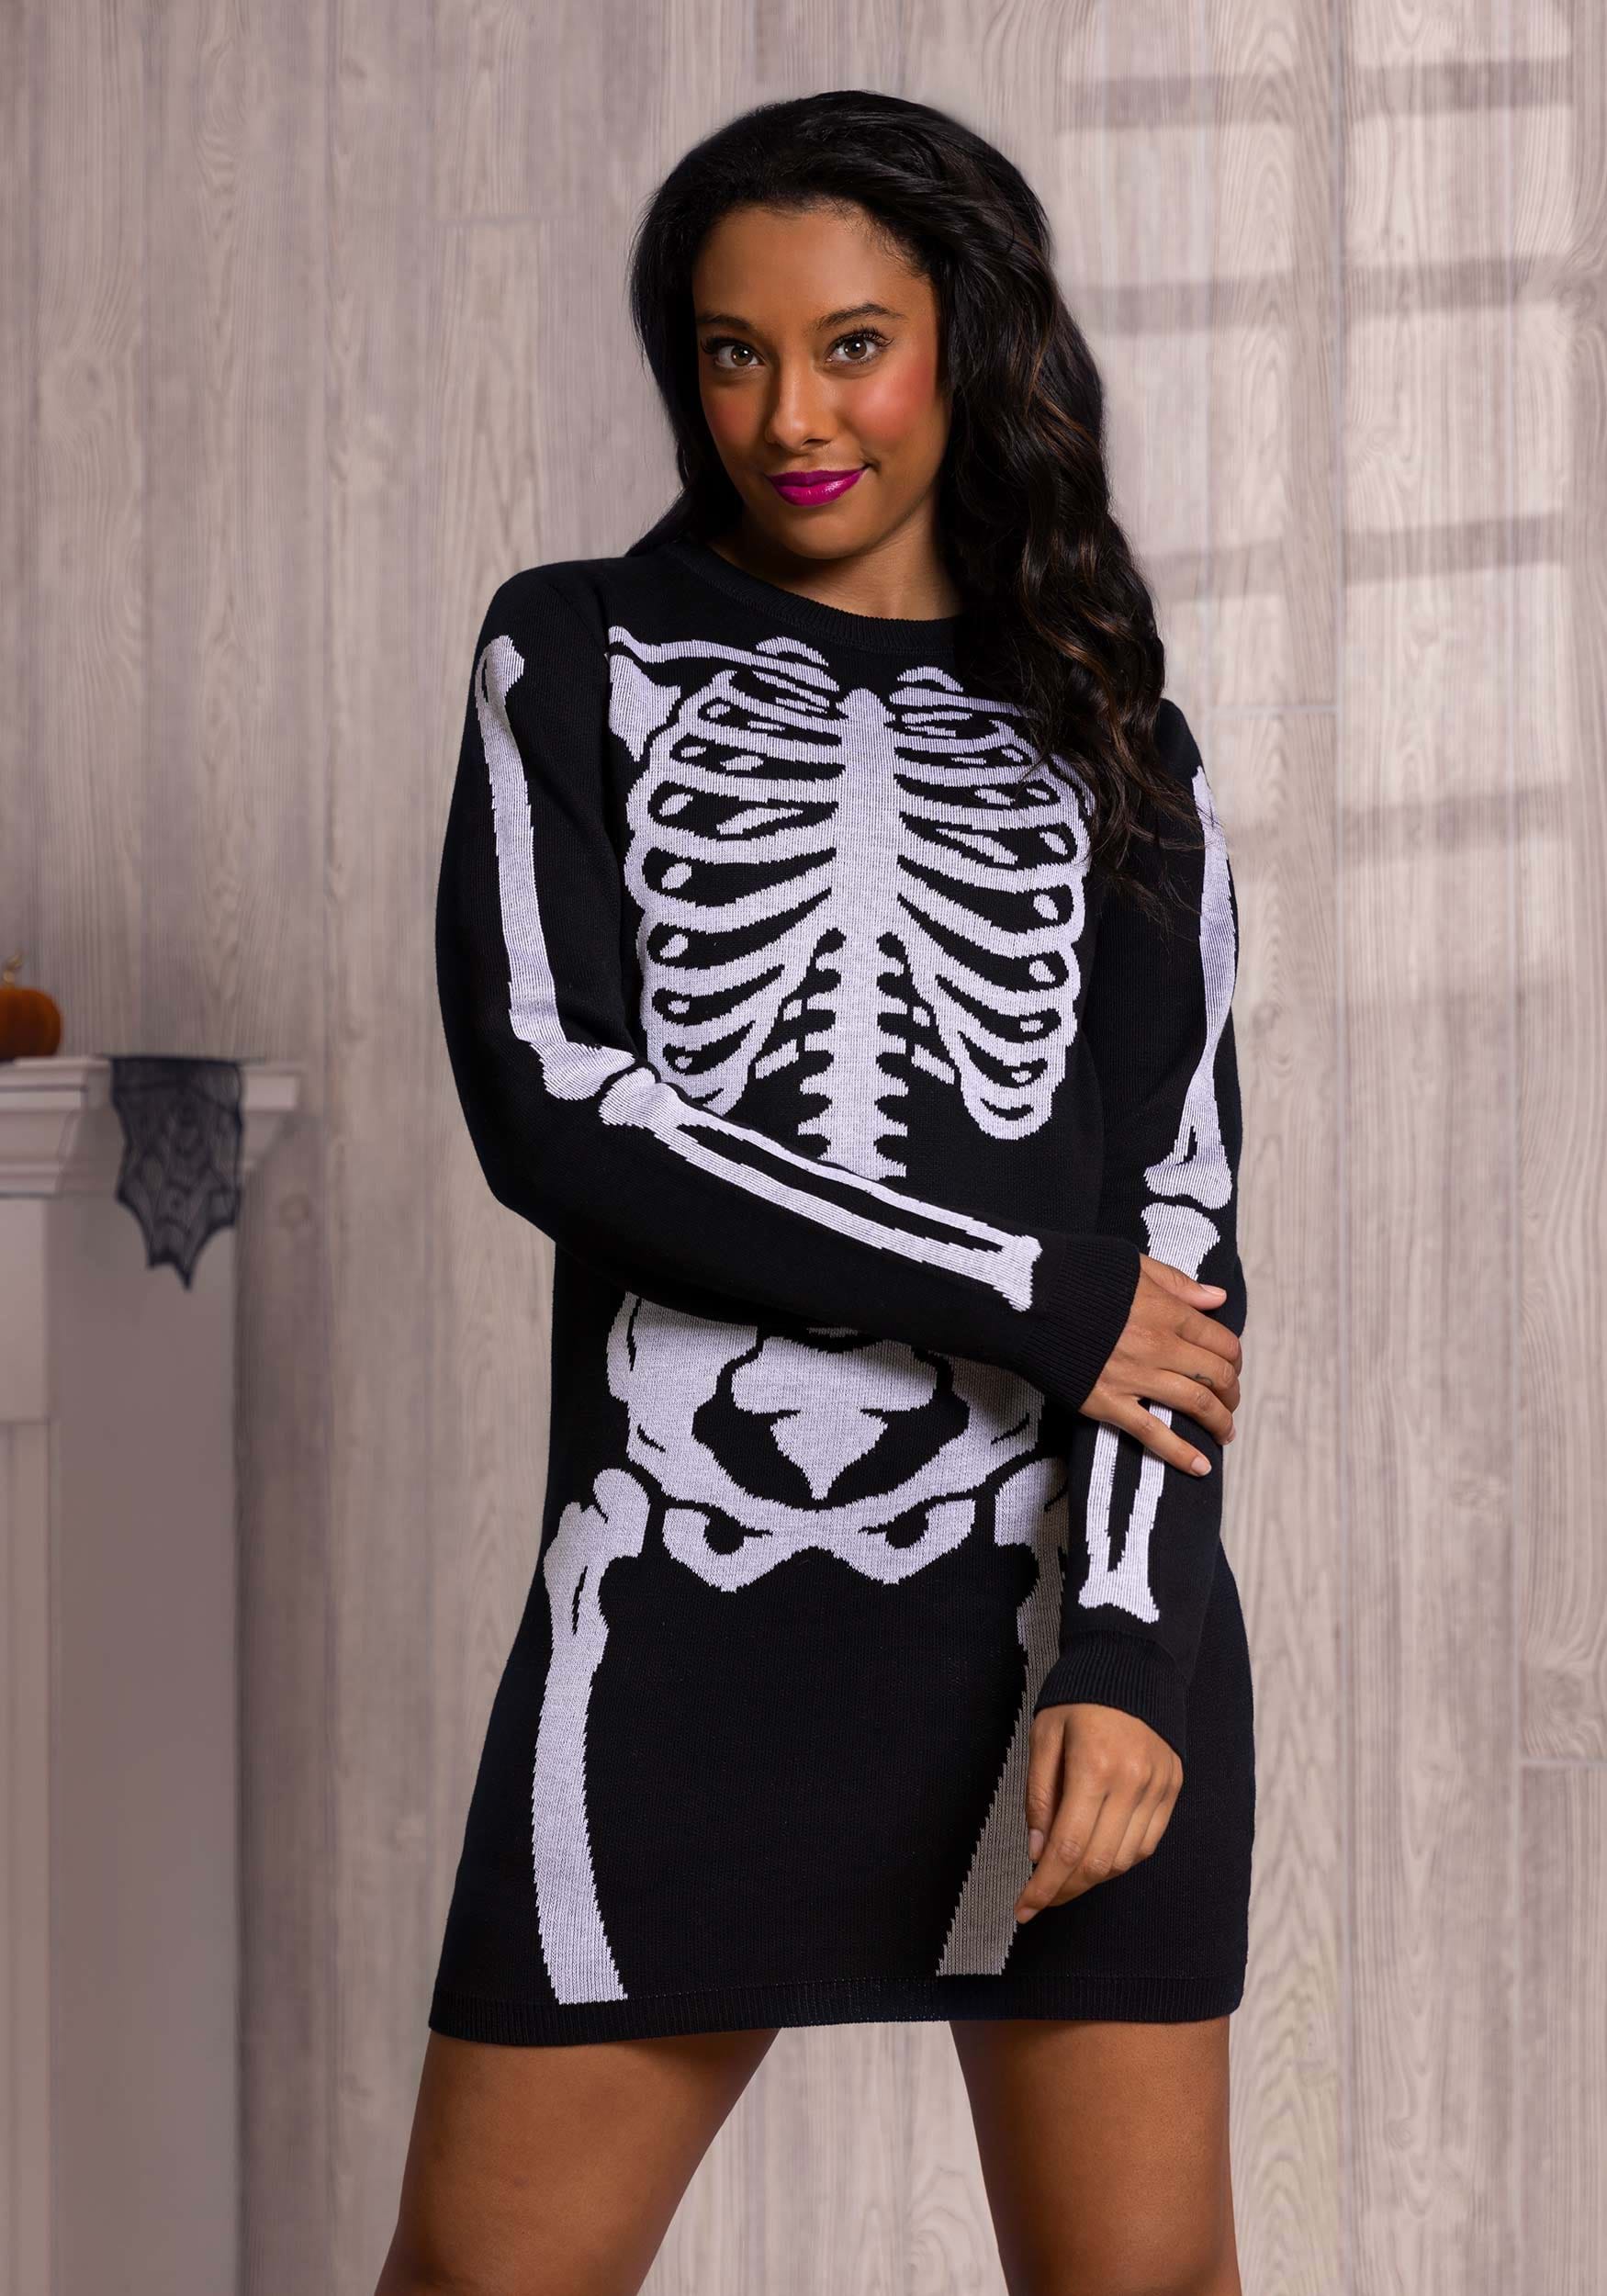 skeleton dress